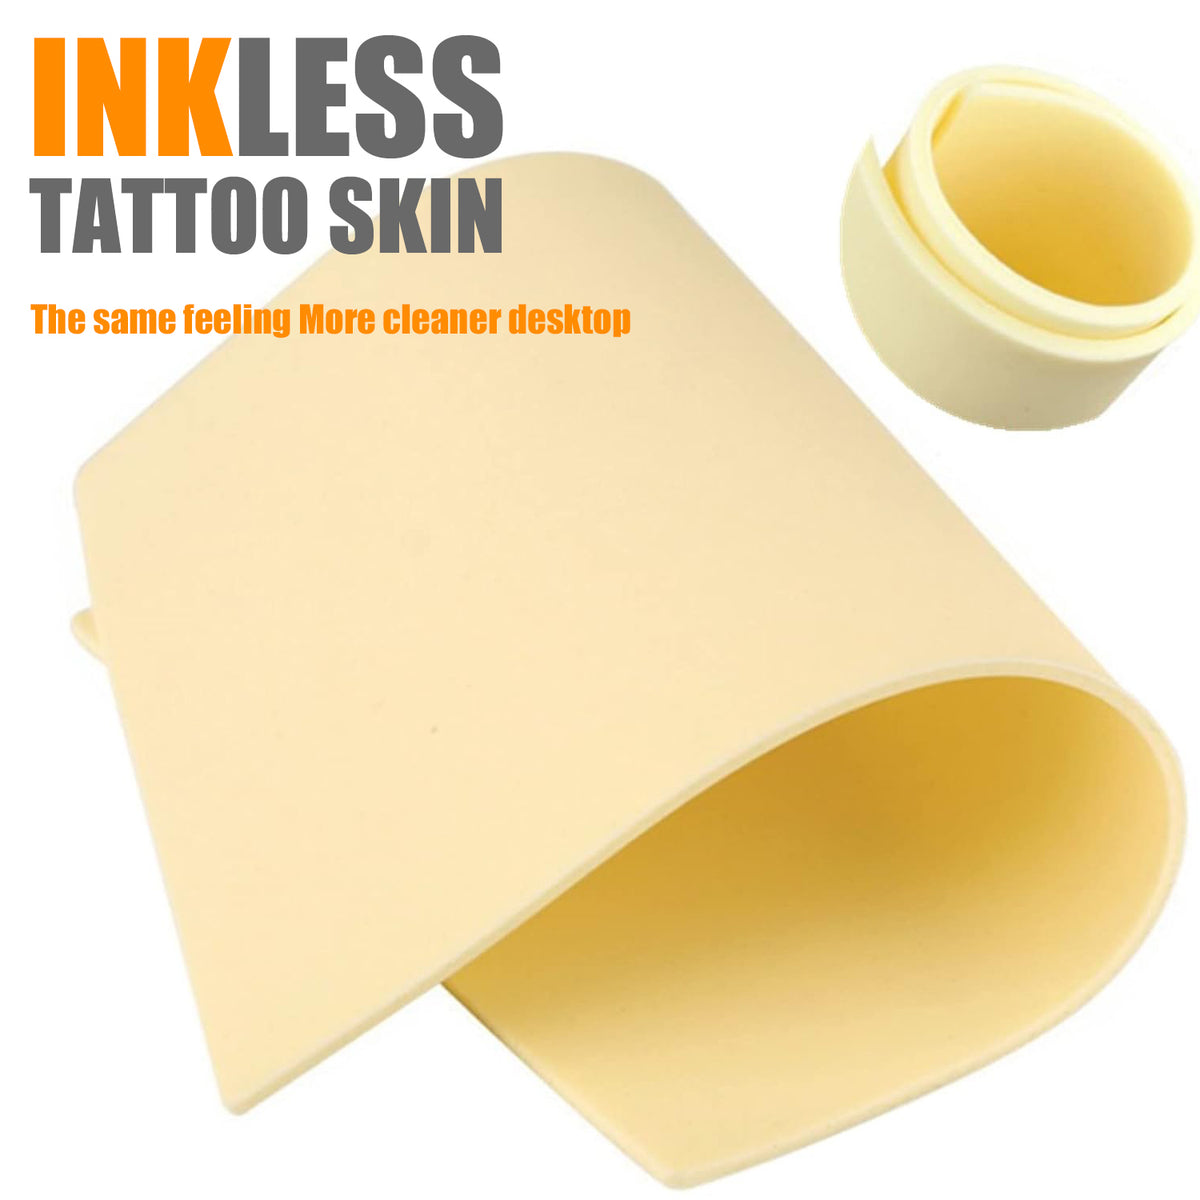 INKLESS 3mm 8x12" Fake Skin Tattoo Practice Skins